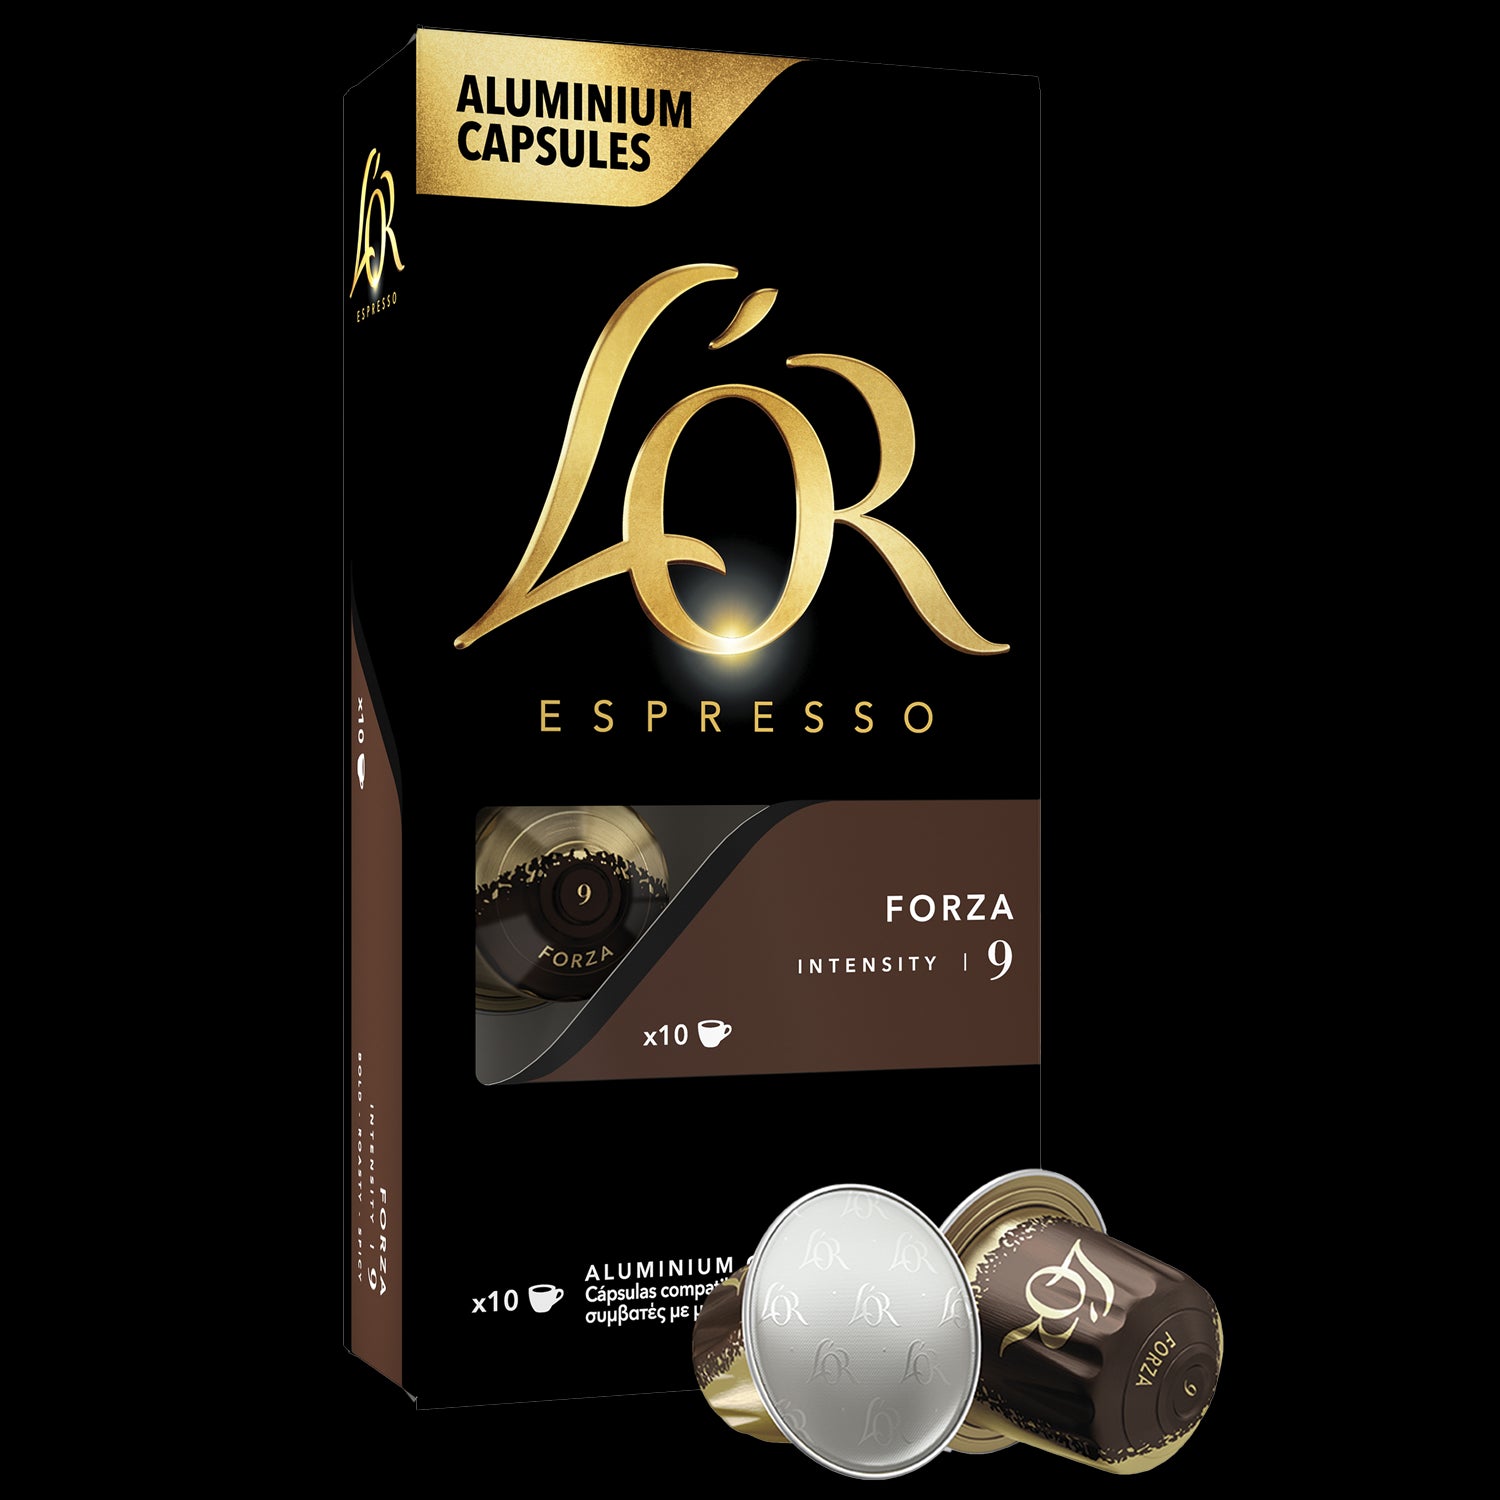 L'Or Espresso Gold Espresso Gold Absolutamente - Intensity 9-50